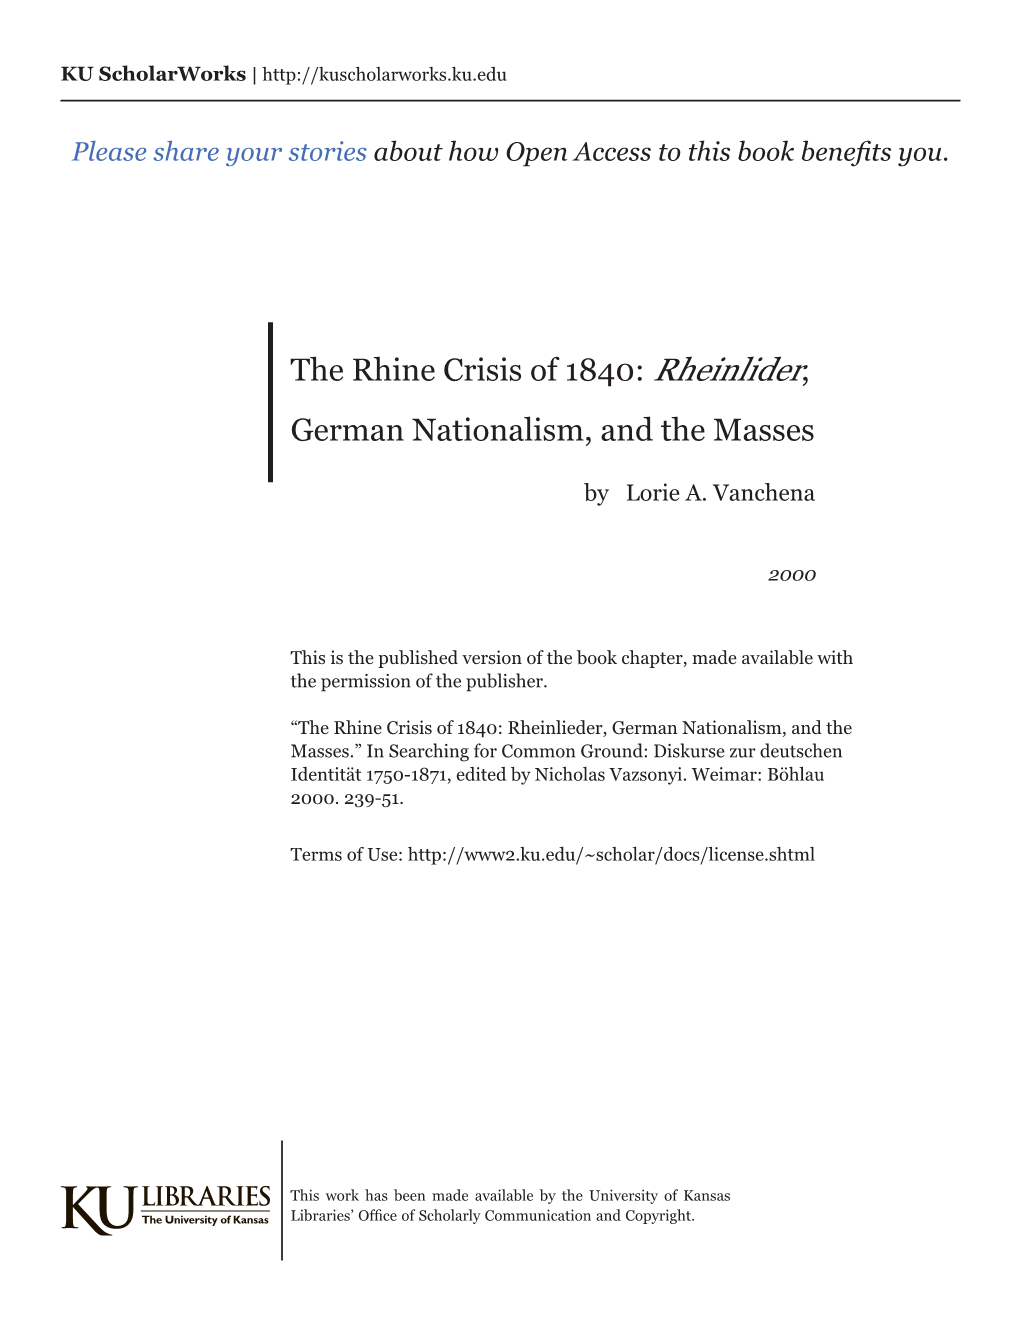 The Rhine Crisis of 1840: Rheinlider, German Nationalism, and the Masses